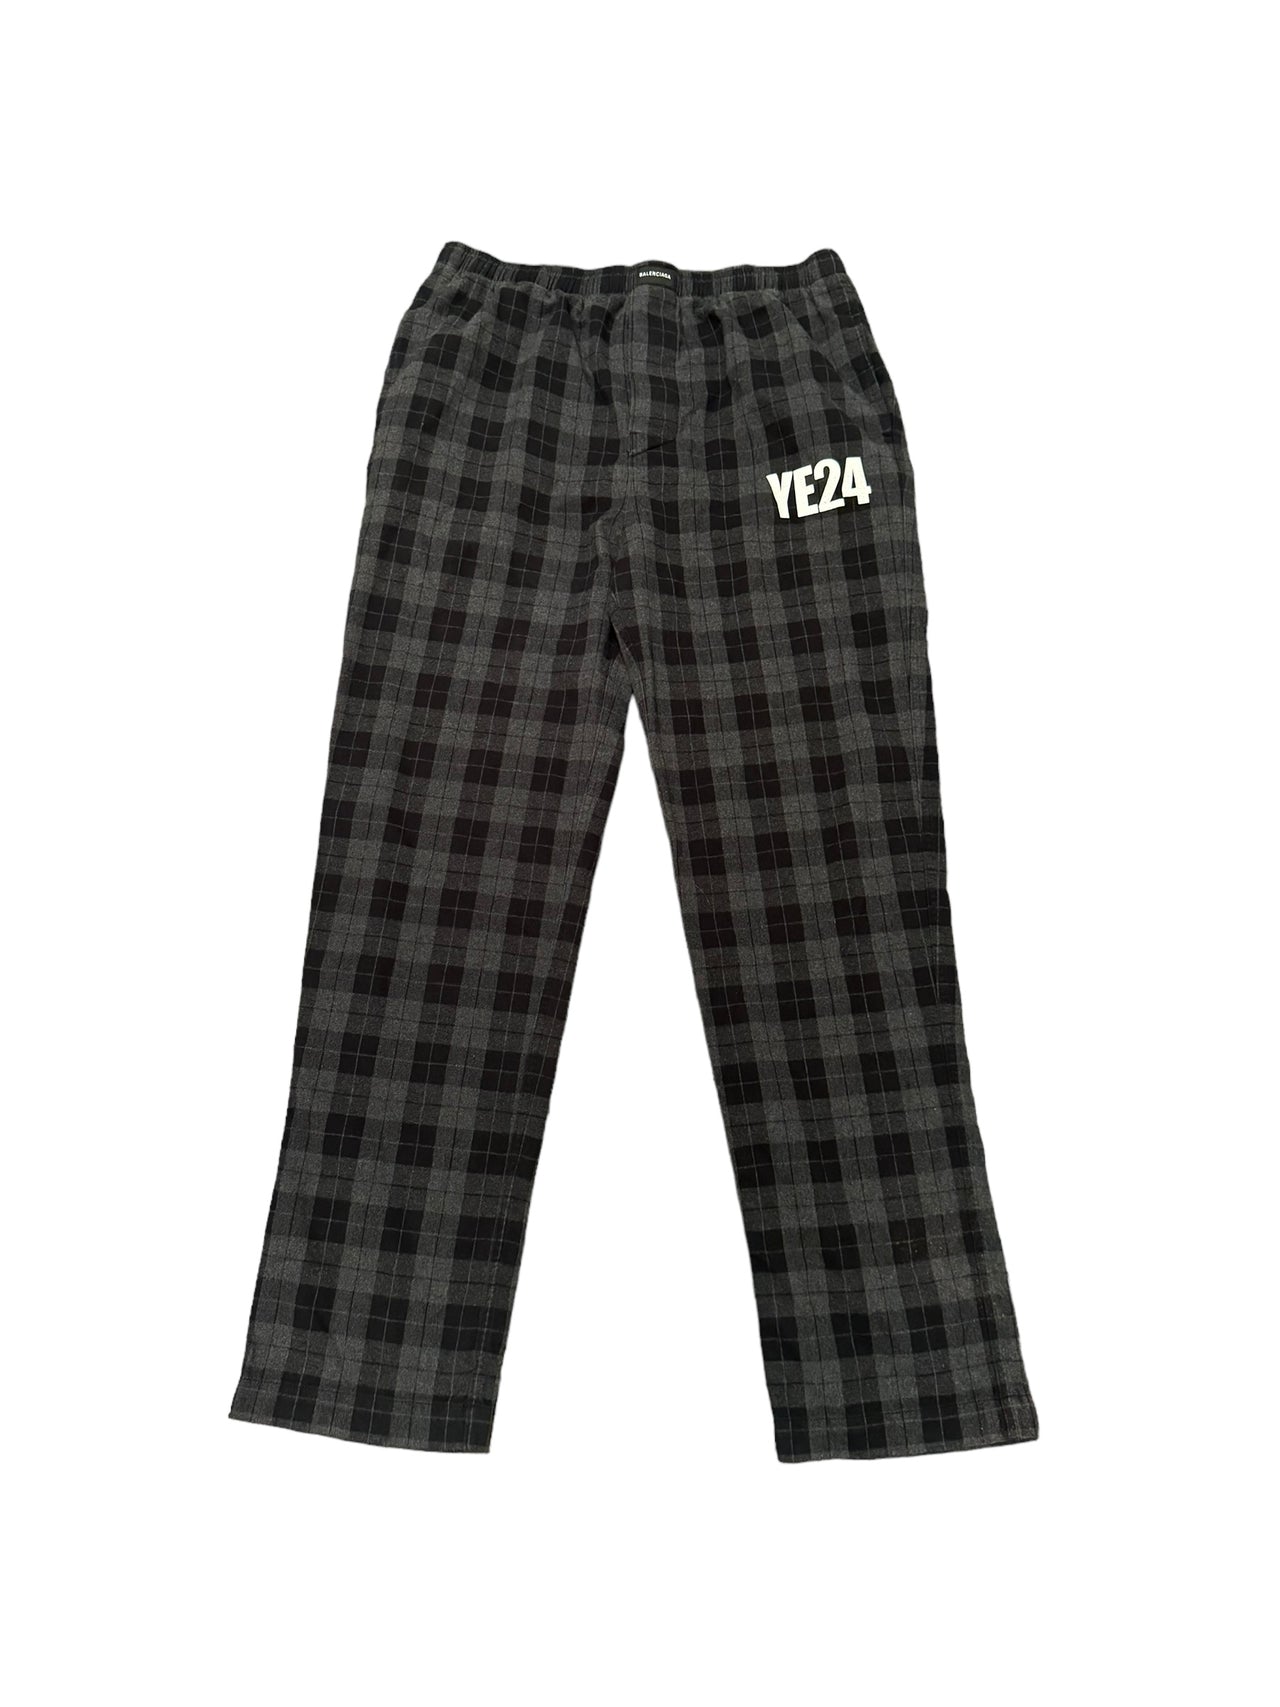 Balenciaga Ye24 Pajama Pants